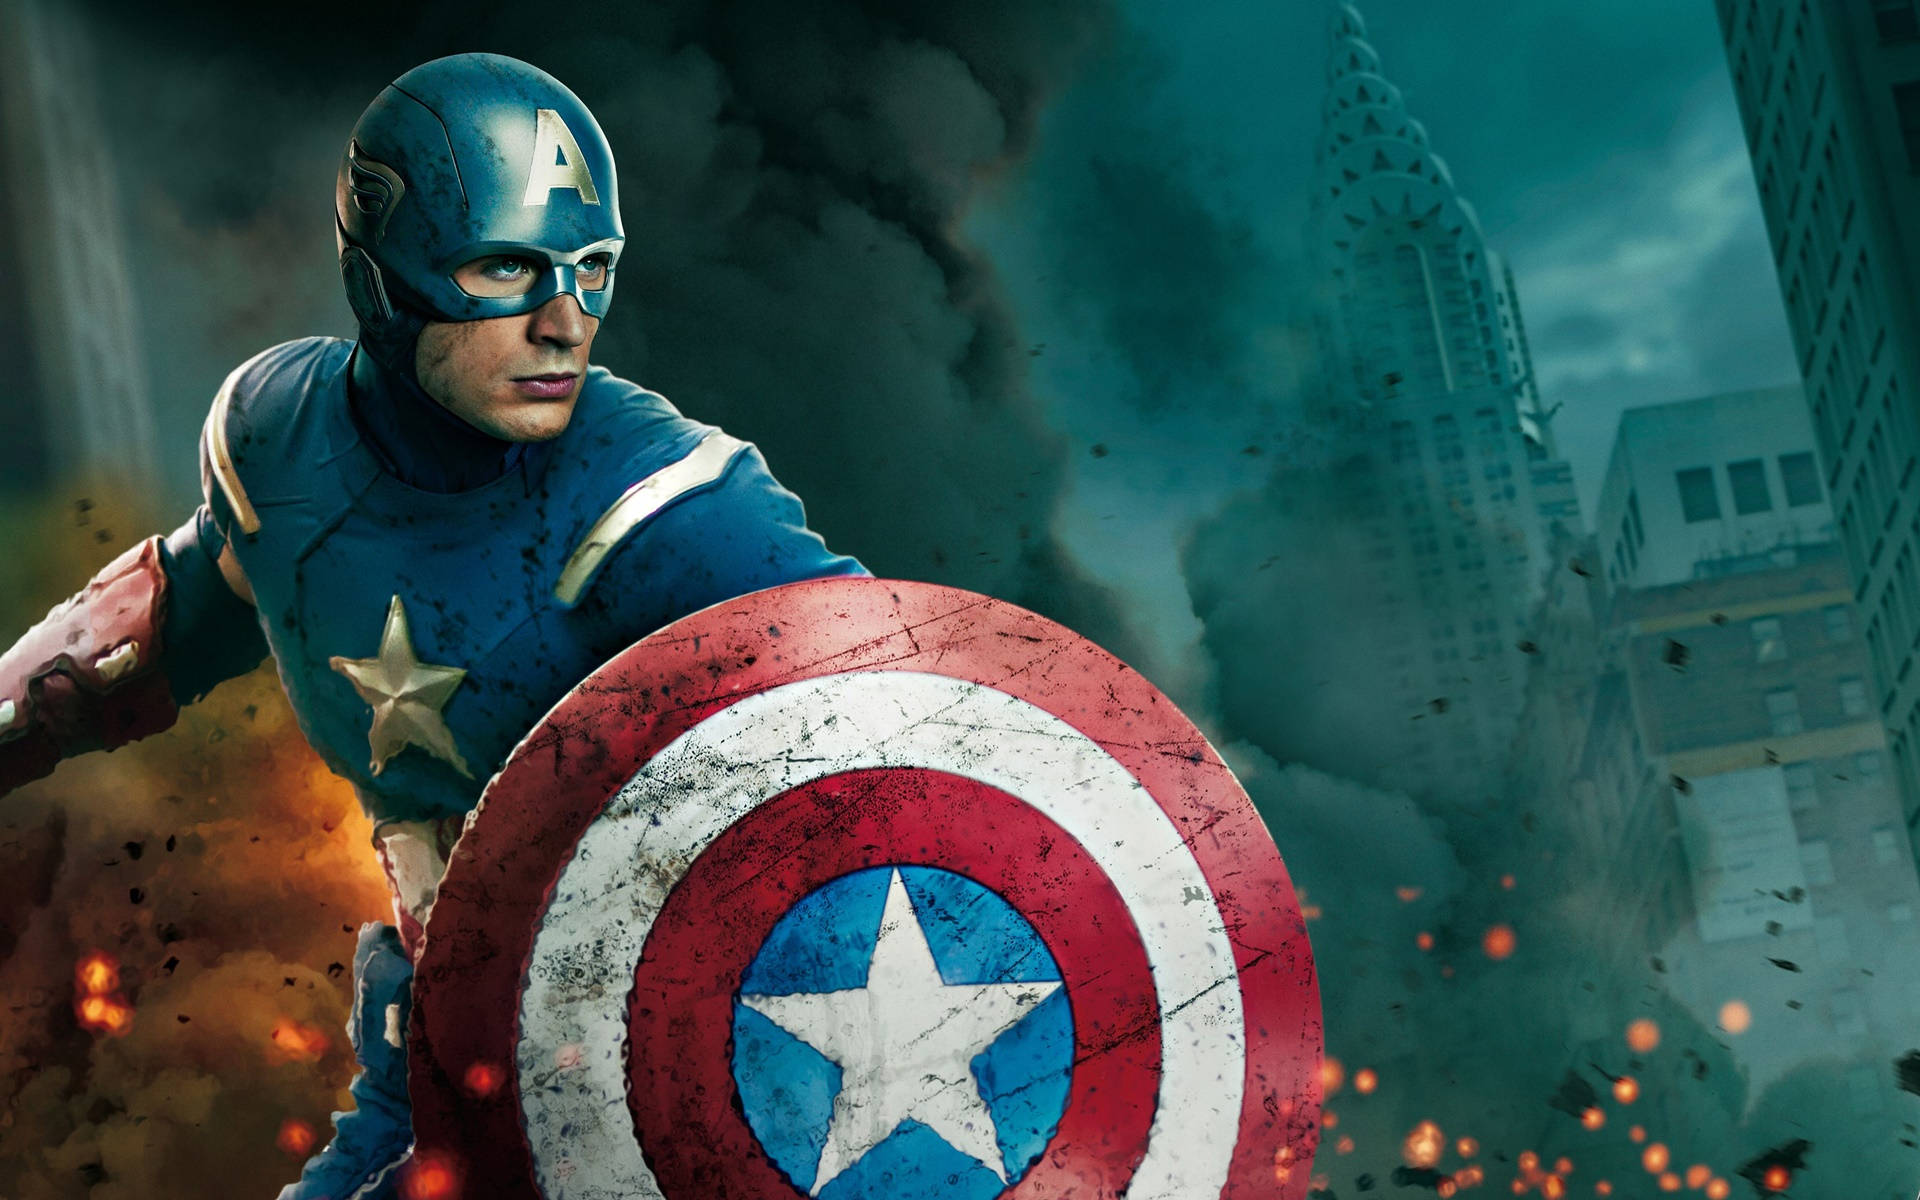 Captain America Superhero Winter Soldier Poster Background